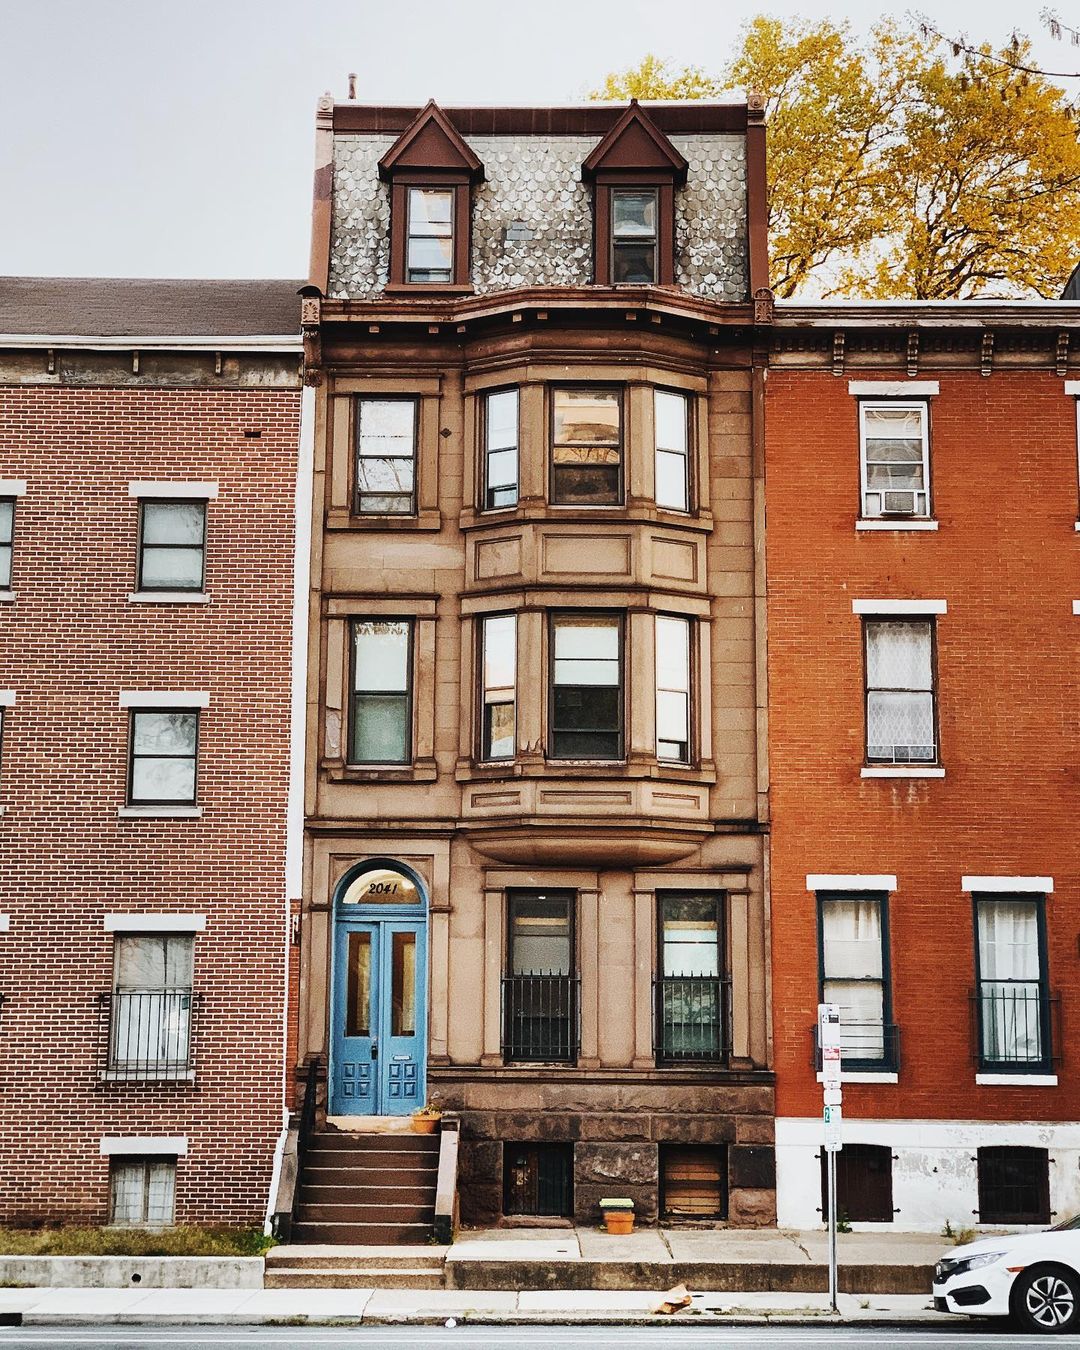 Victorian row home with a blue door in Fairmount-Spring Garden neighborhood of Philadelphia. Photo by Instagram user @cattawa87. 